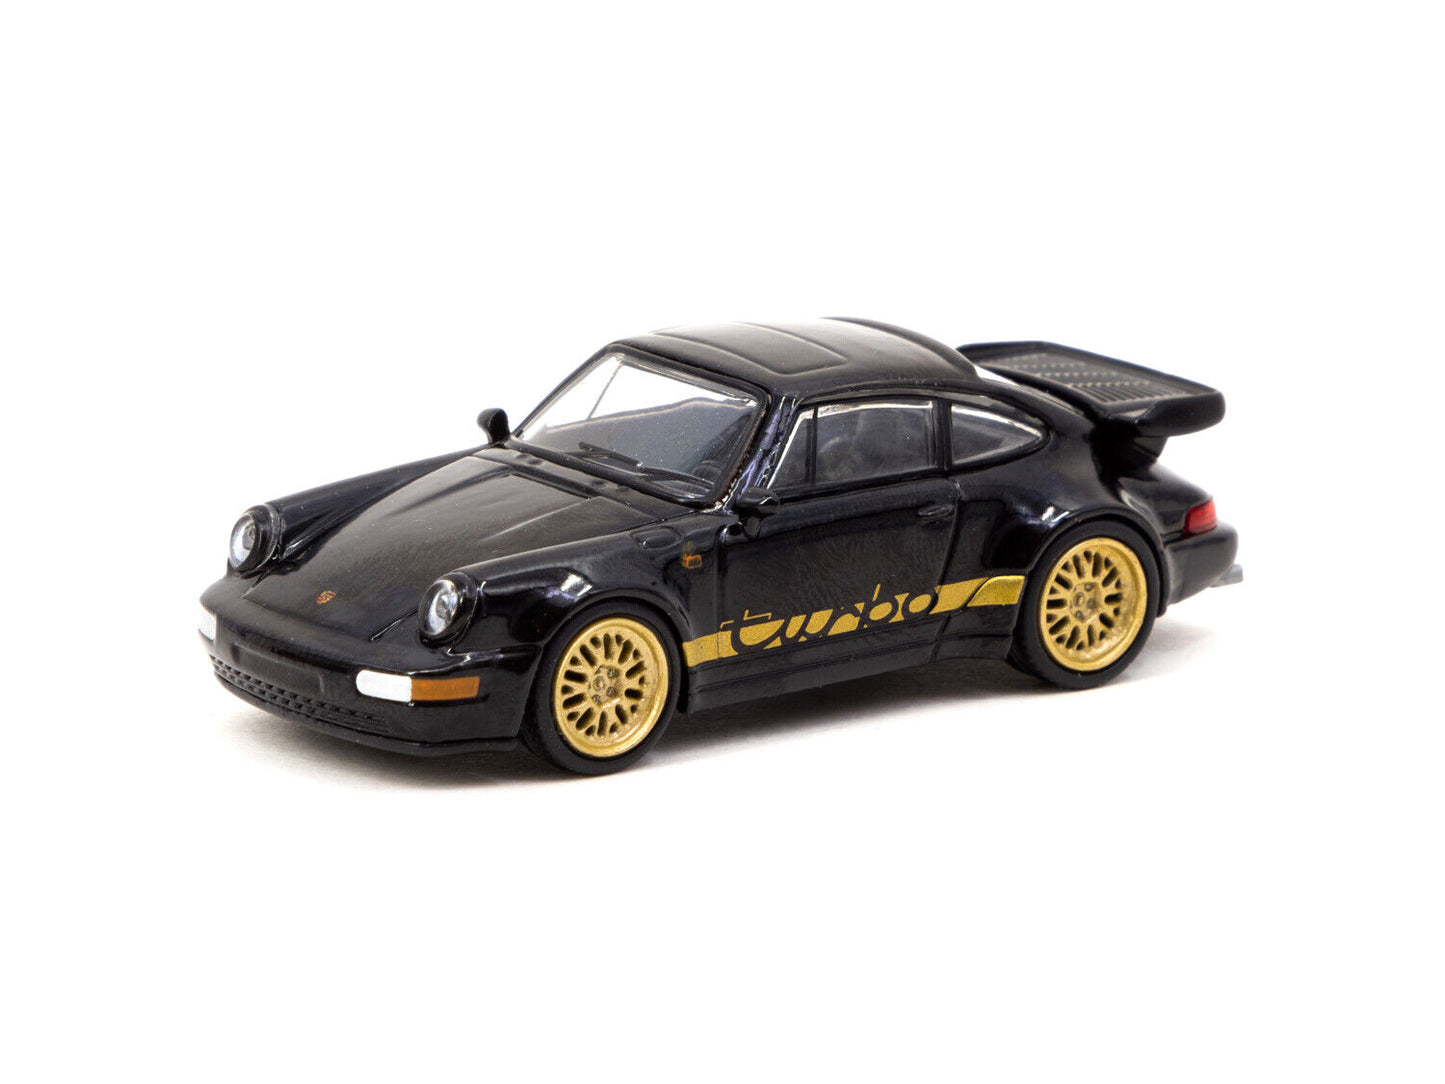 Schuco Tarmac Works Collab64 Porsche 911 Turbo Black 1:64